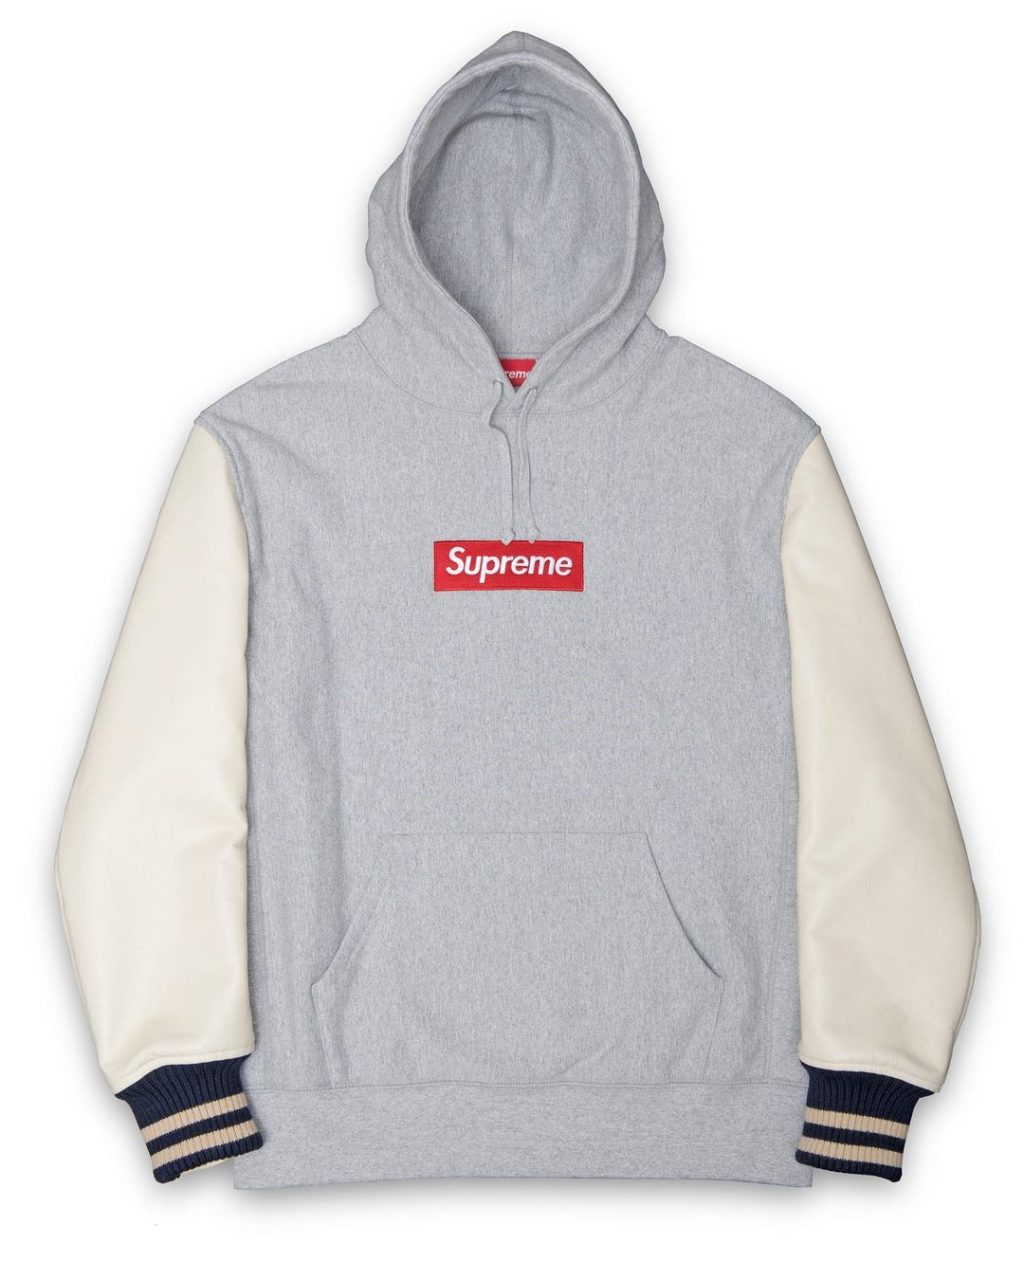 Supreme × JUNYA WATANABE COMME des GARCONS MAN Box Logo Hooded  Sweatshirtが11/13に国内発売予定 | God Meets Fashion